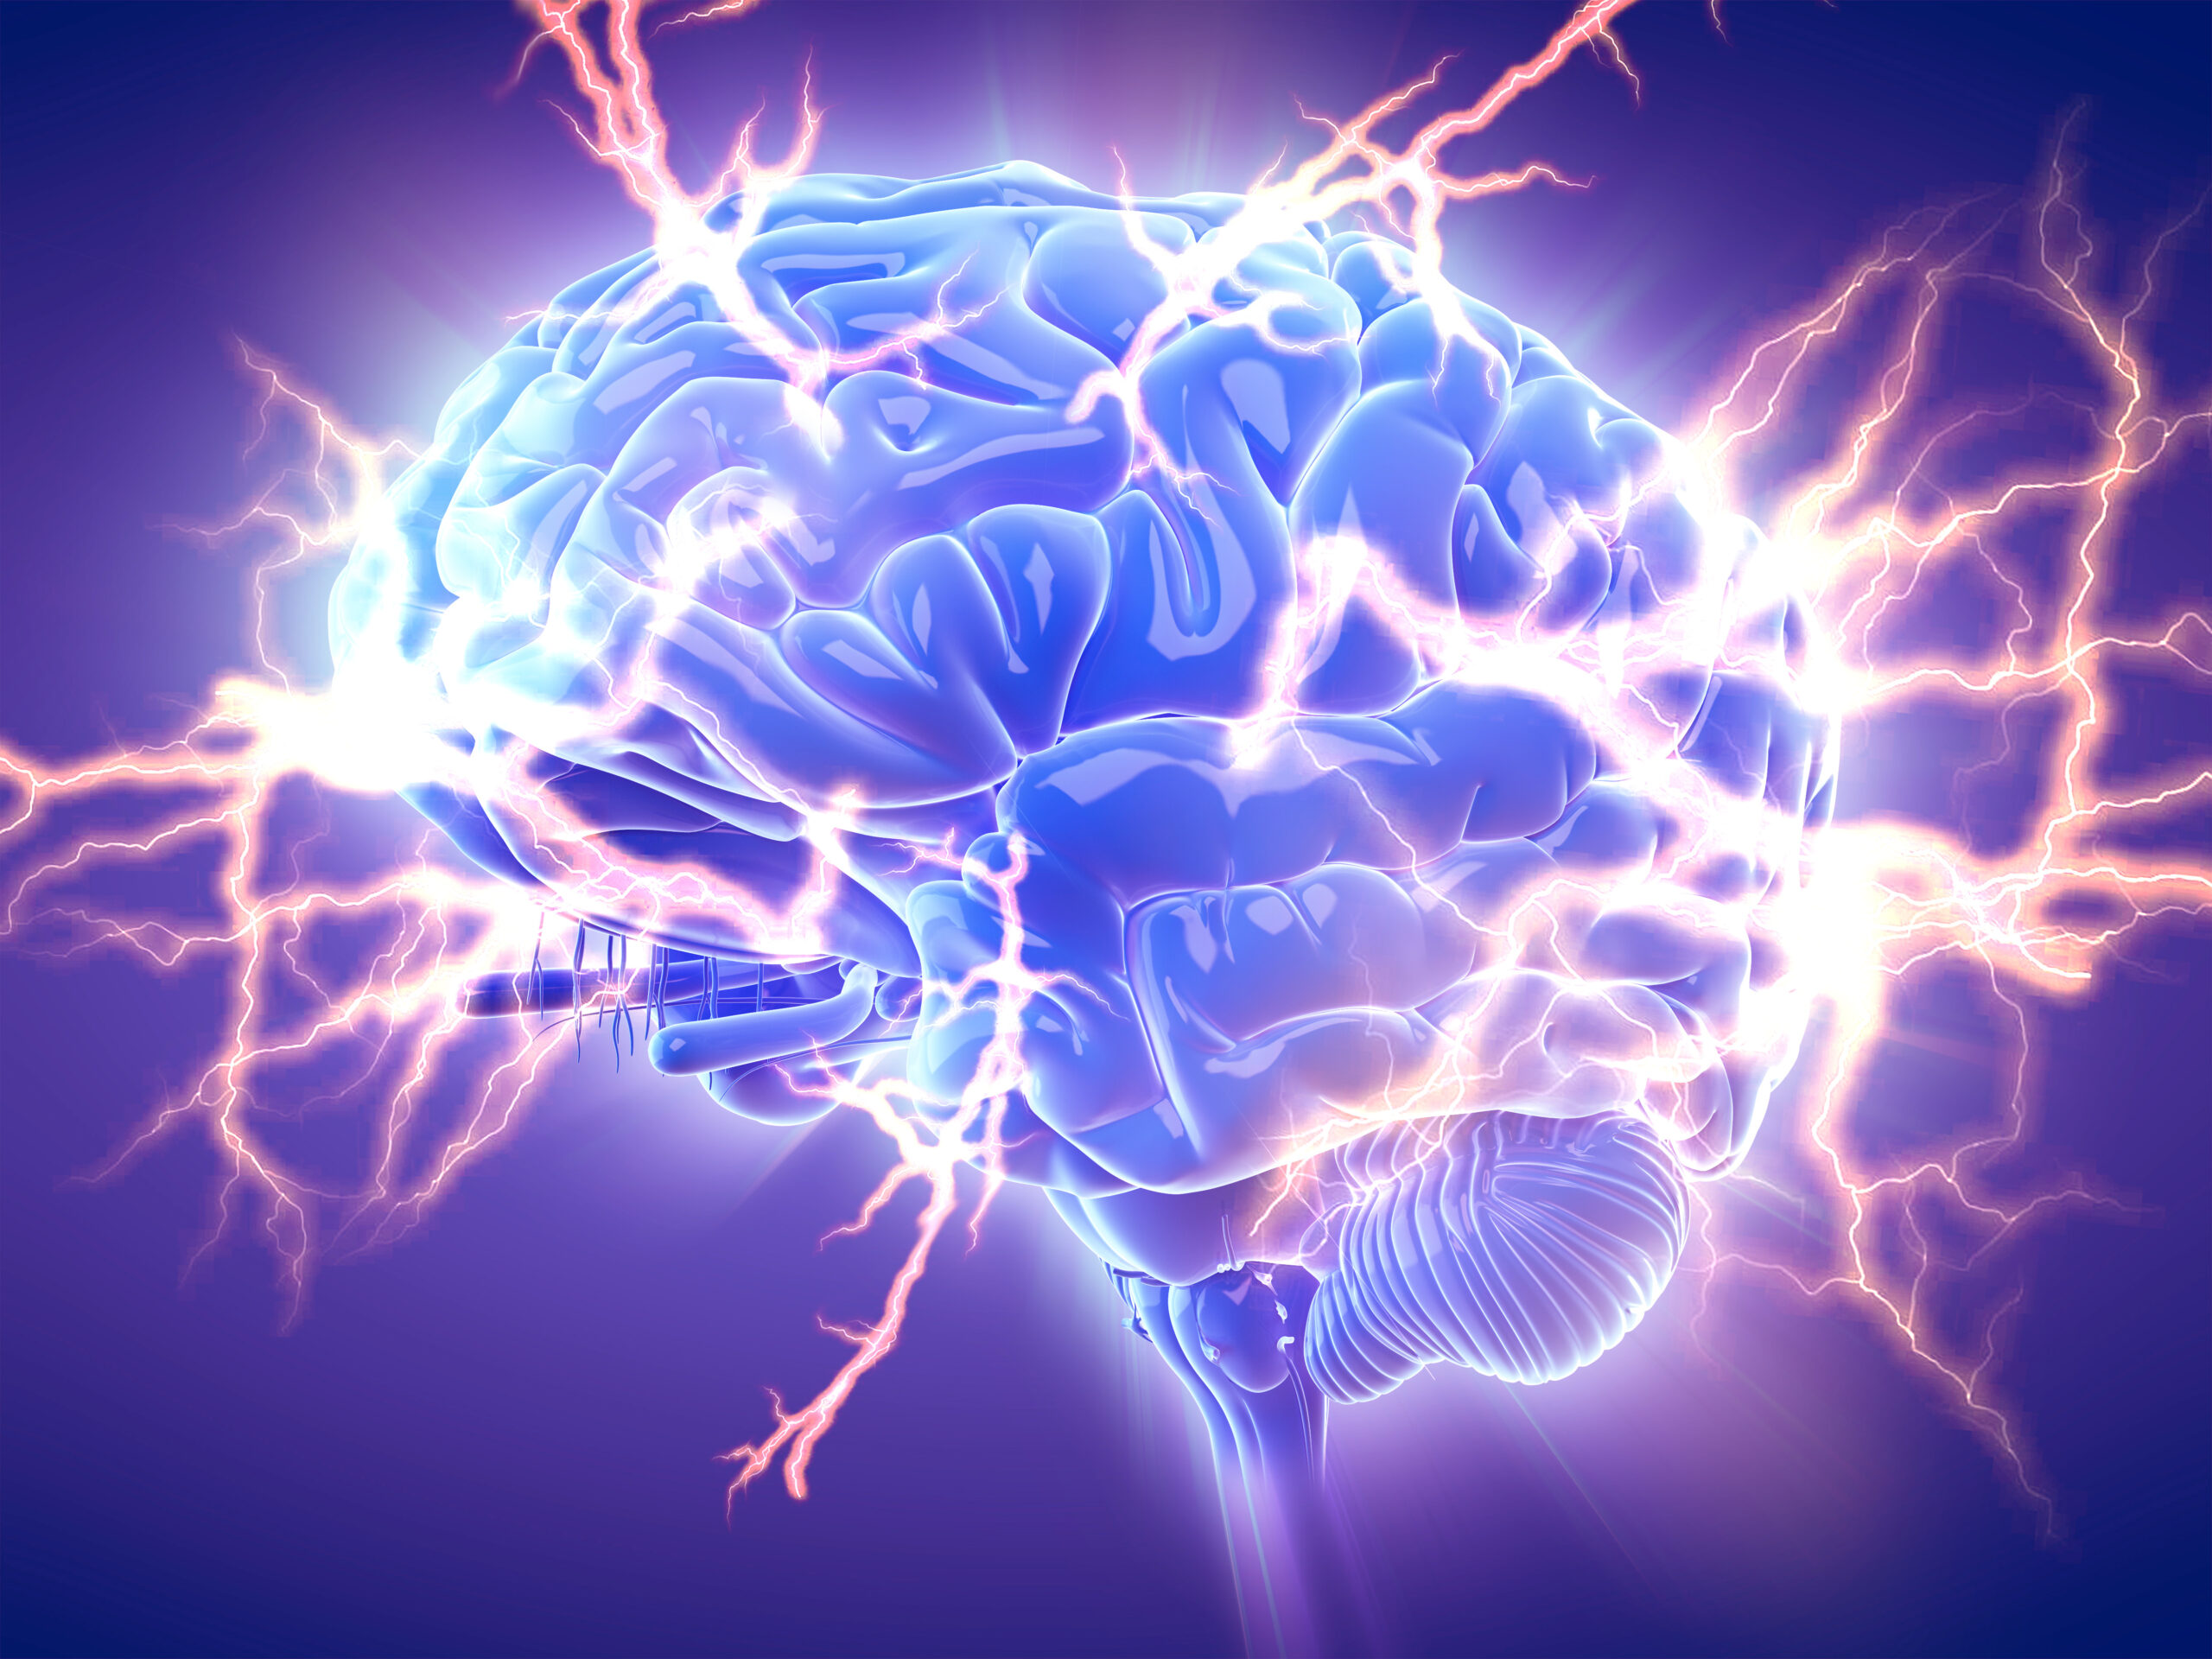 Скорость нейронов в мозге. Мозг с молнией. Электричество в мозгу. Электрические импульсы мозга. Мозг человека электрические импульсы.